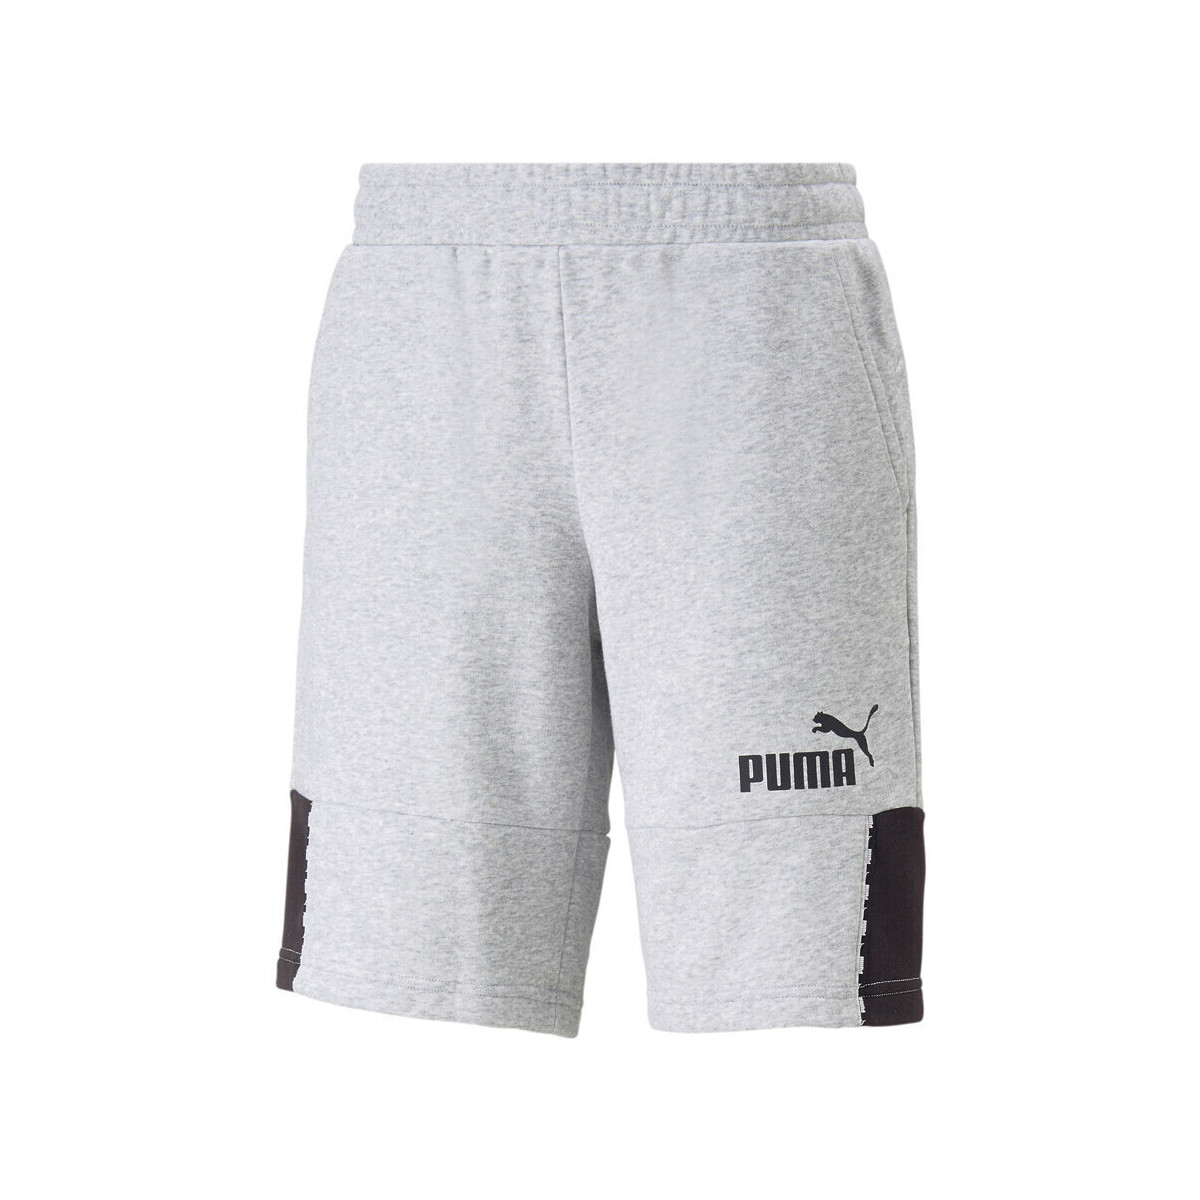 Textil Homem Shorts / Bermudas Puma  Cinza